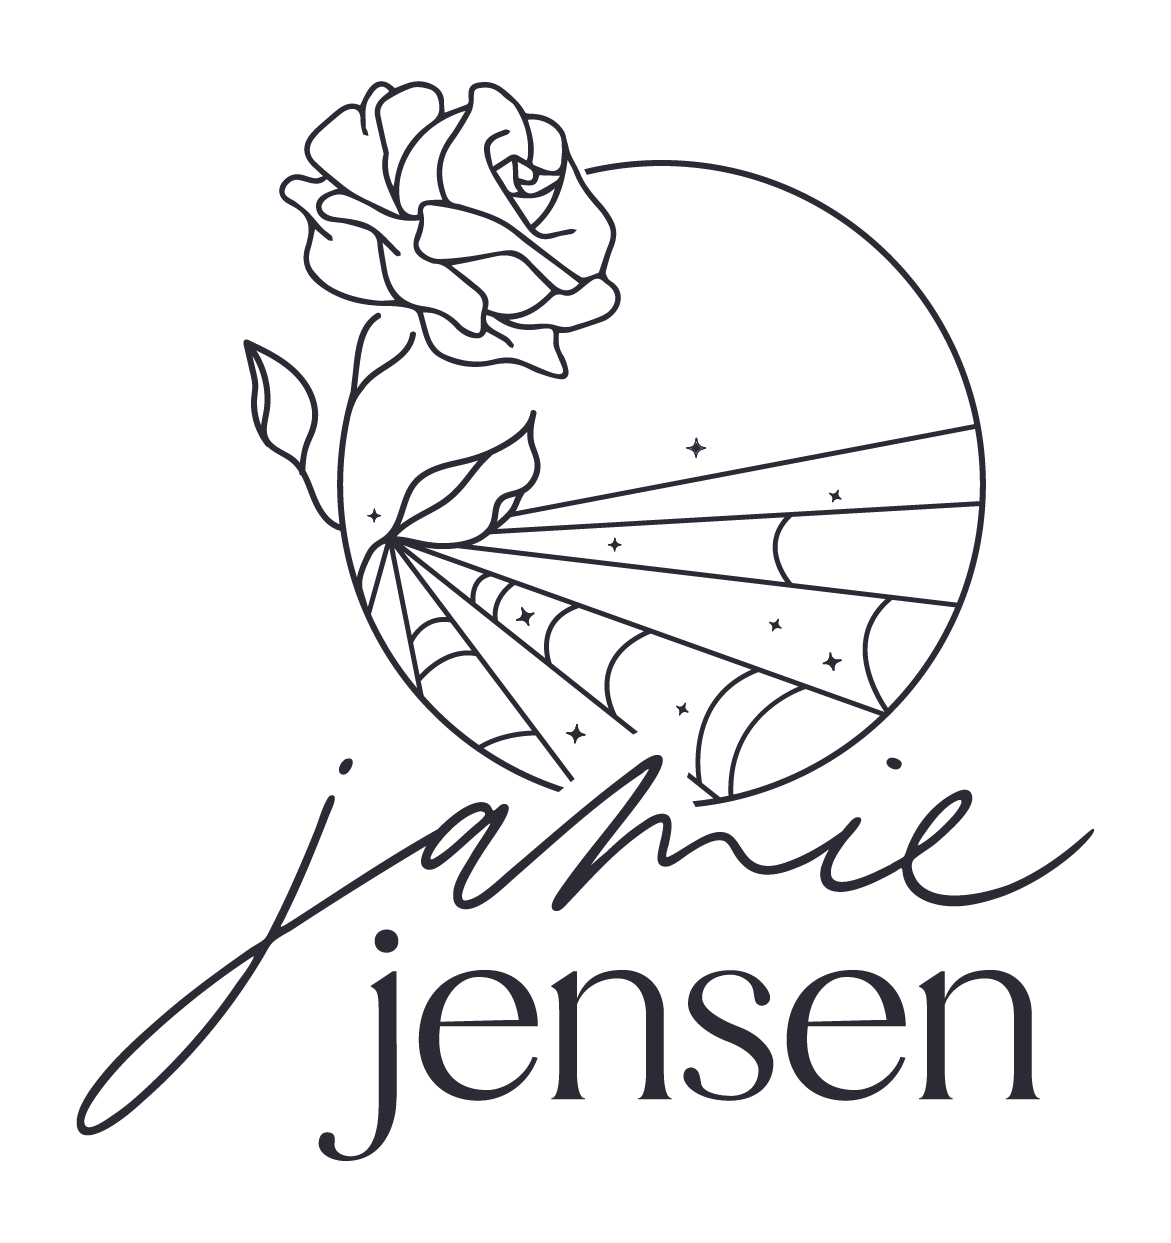 Jamie Jensen